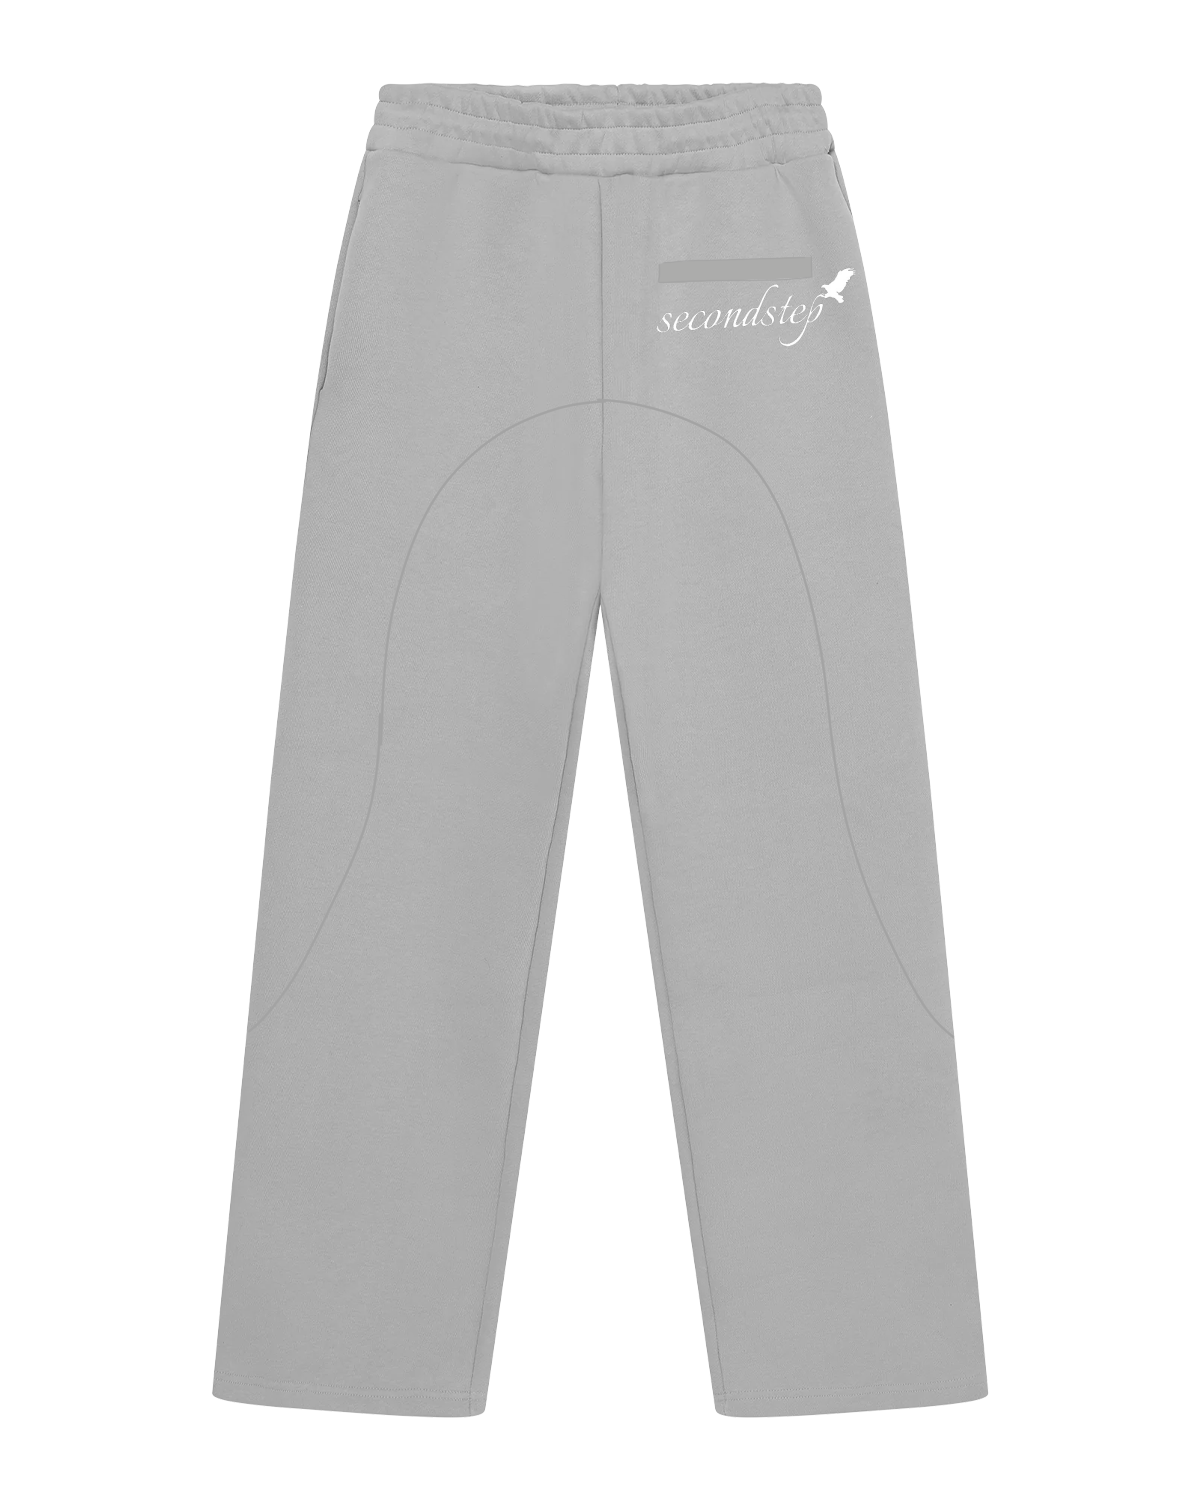 open leg sweatpants (no logo)